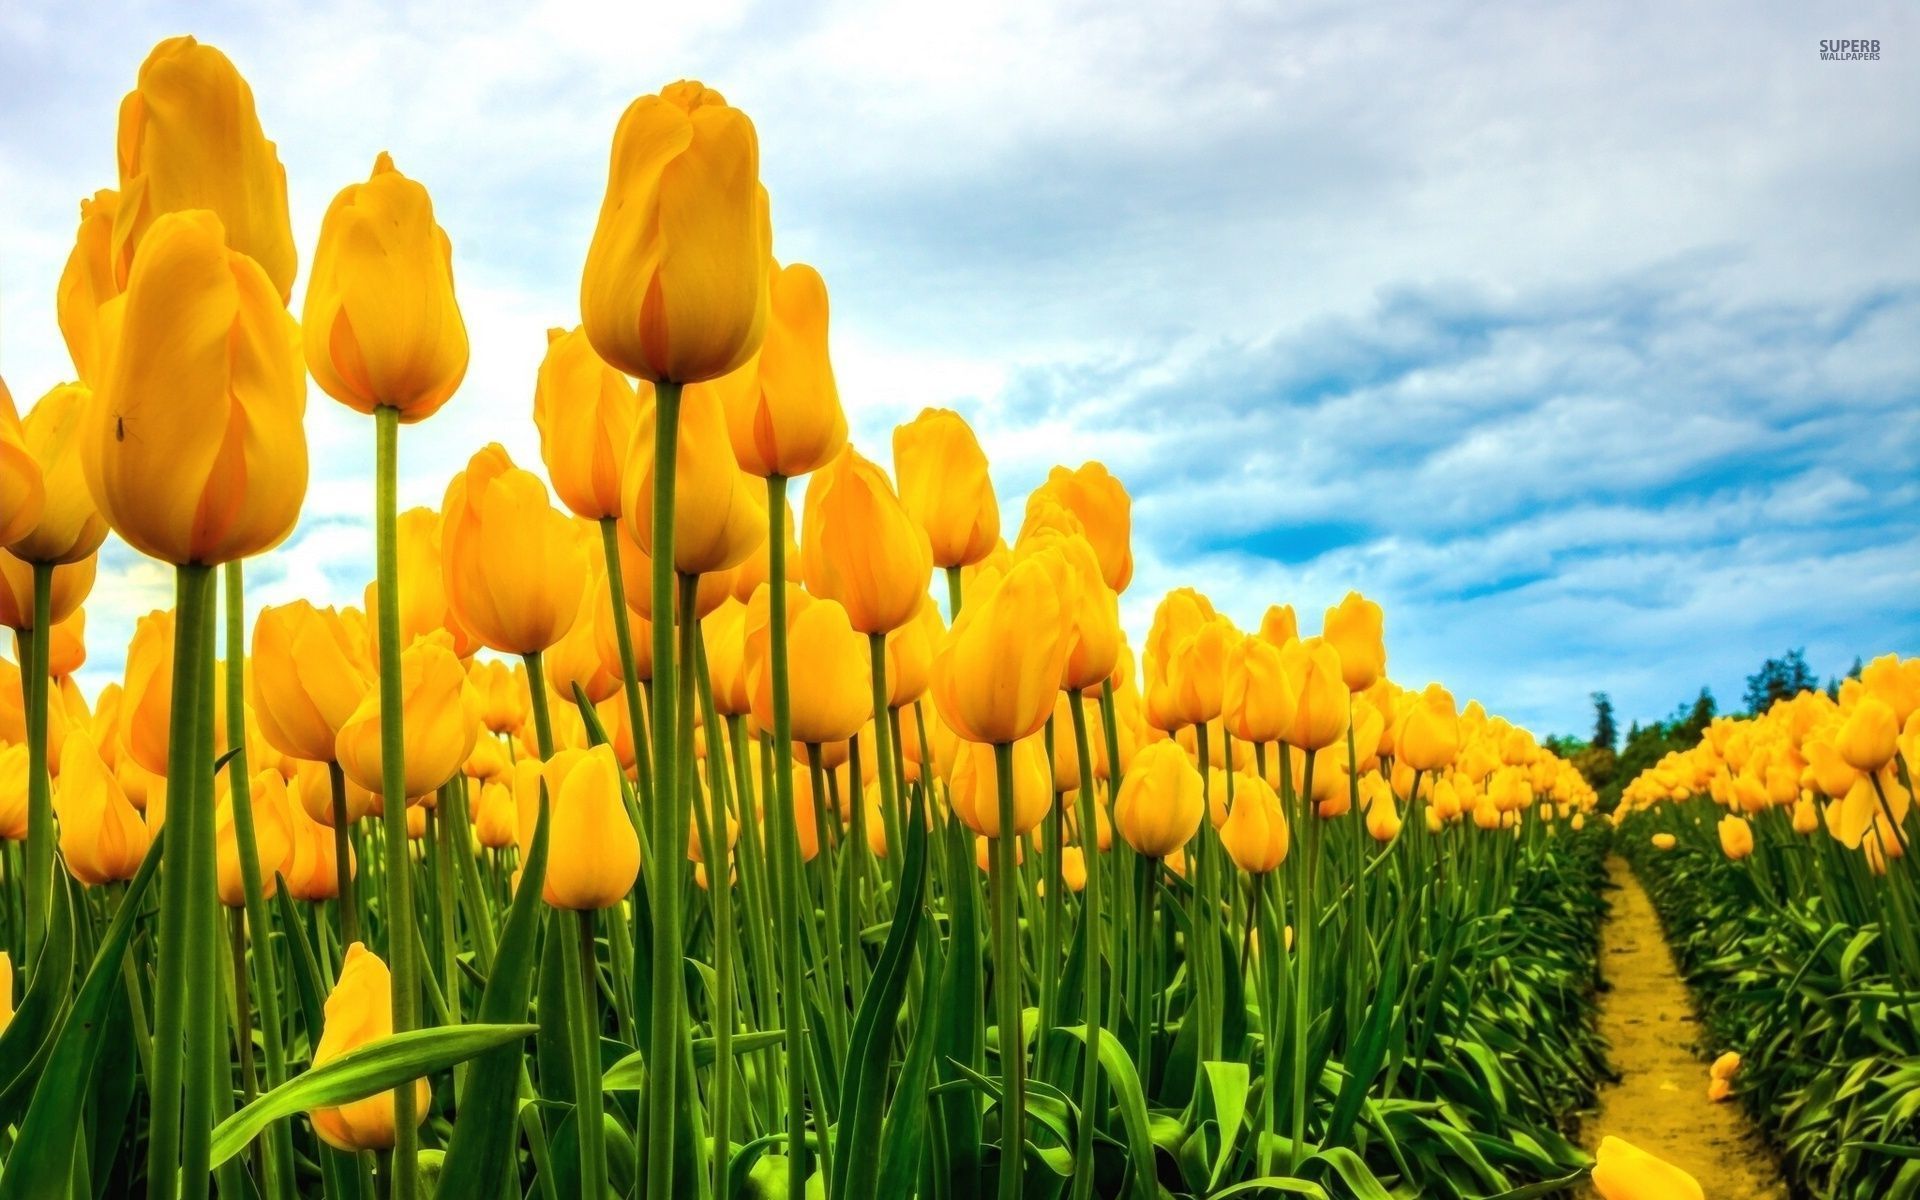 Field Of Yellow Tulips - wallpaper.